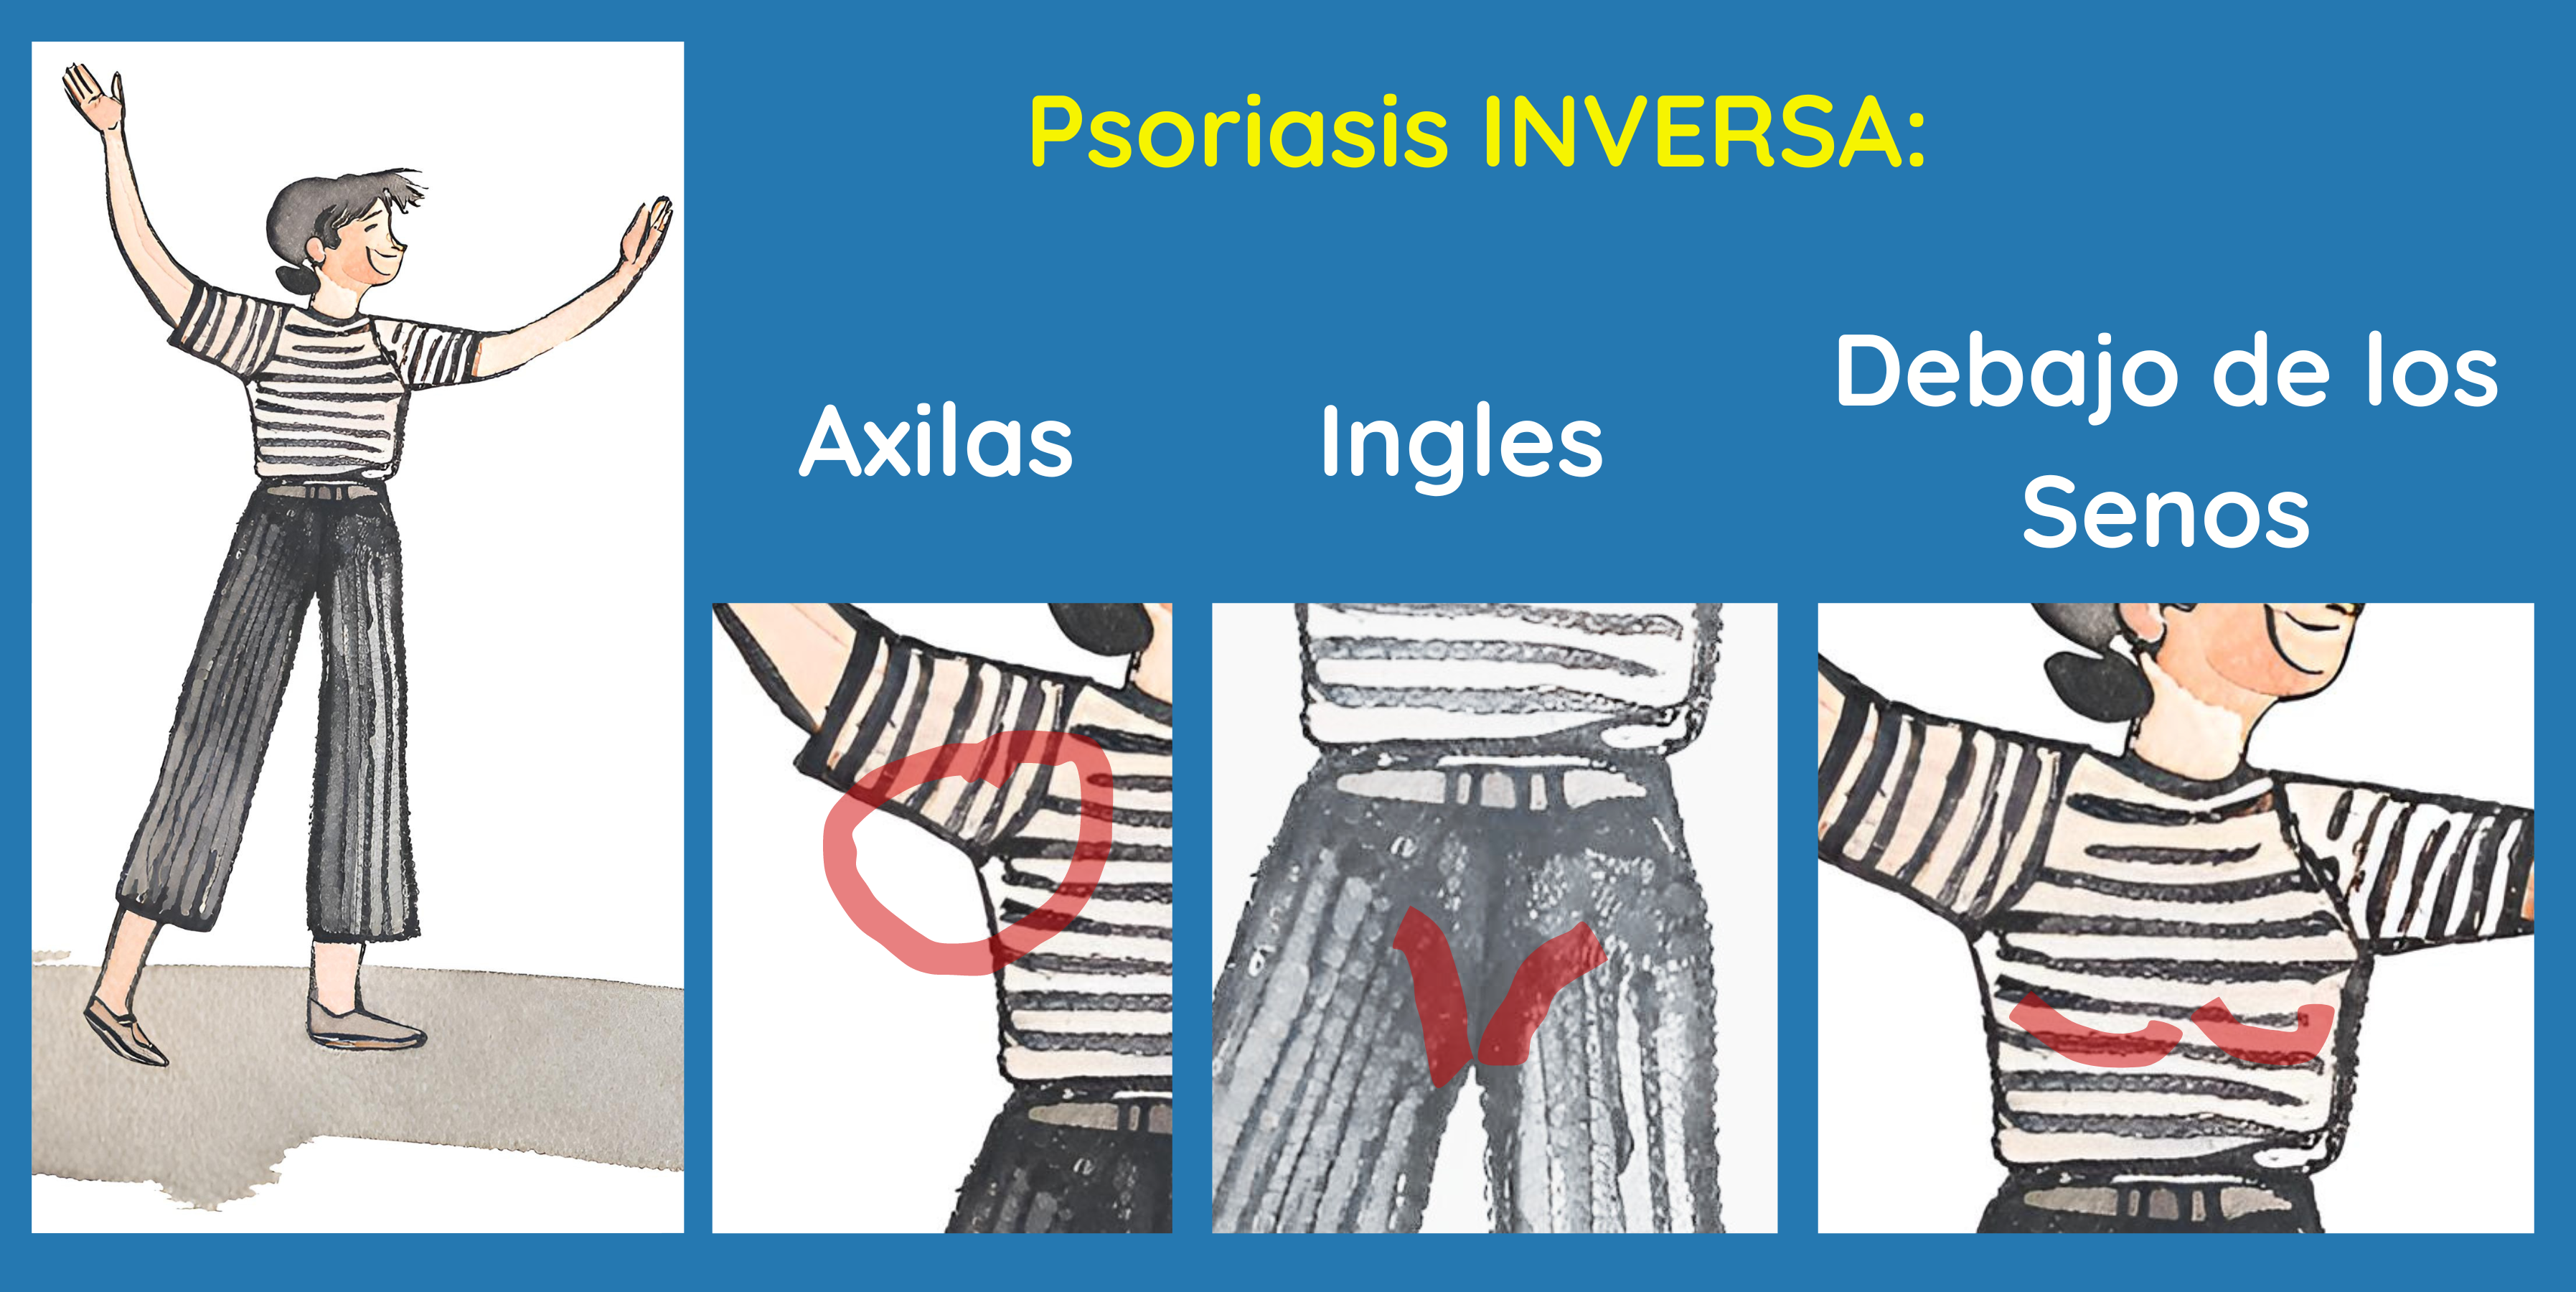 Psoriasis inversa se localiza en axilas, bajo pechos e ingles.